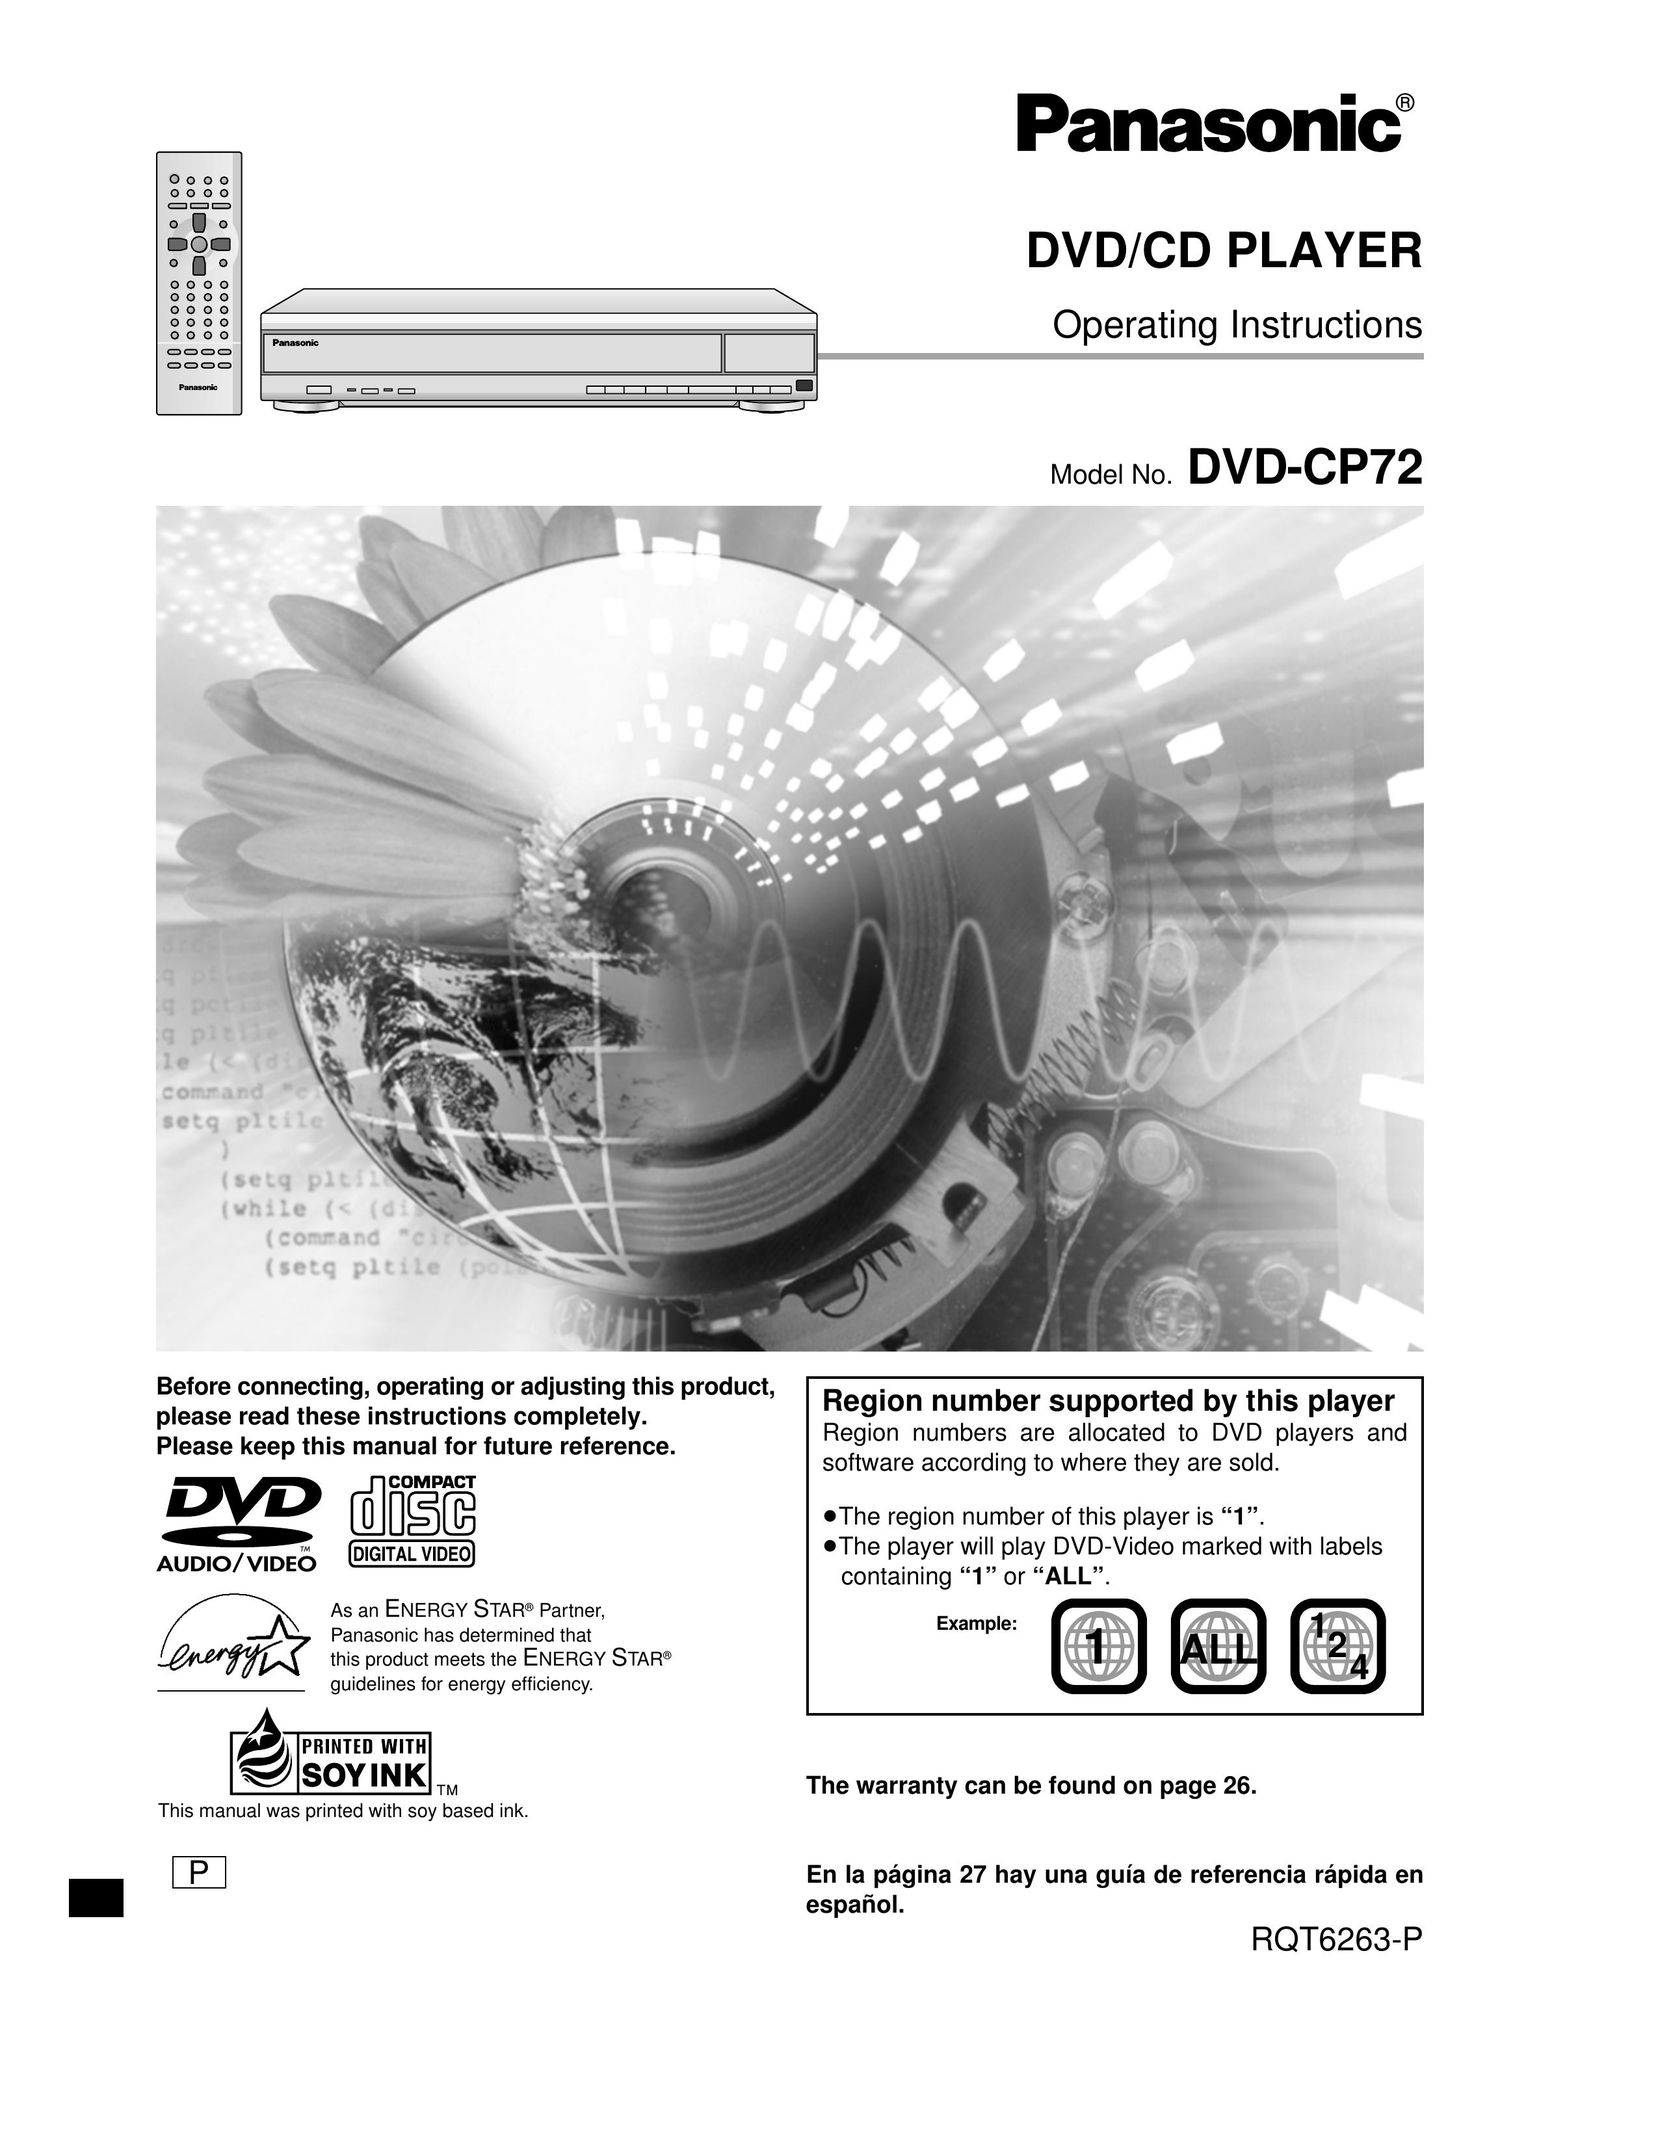 Panasonic DVD-CP72 DVR User Manual